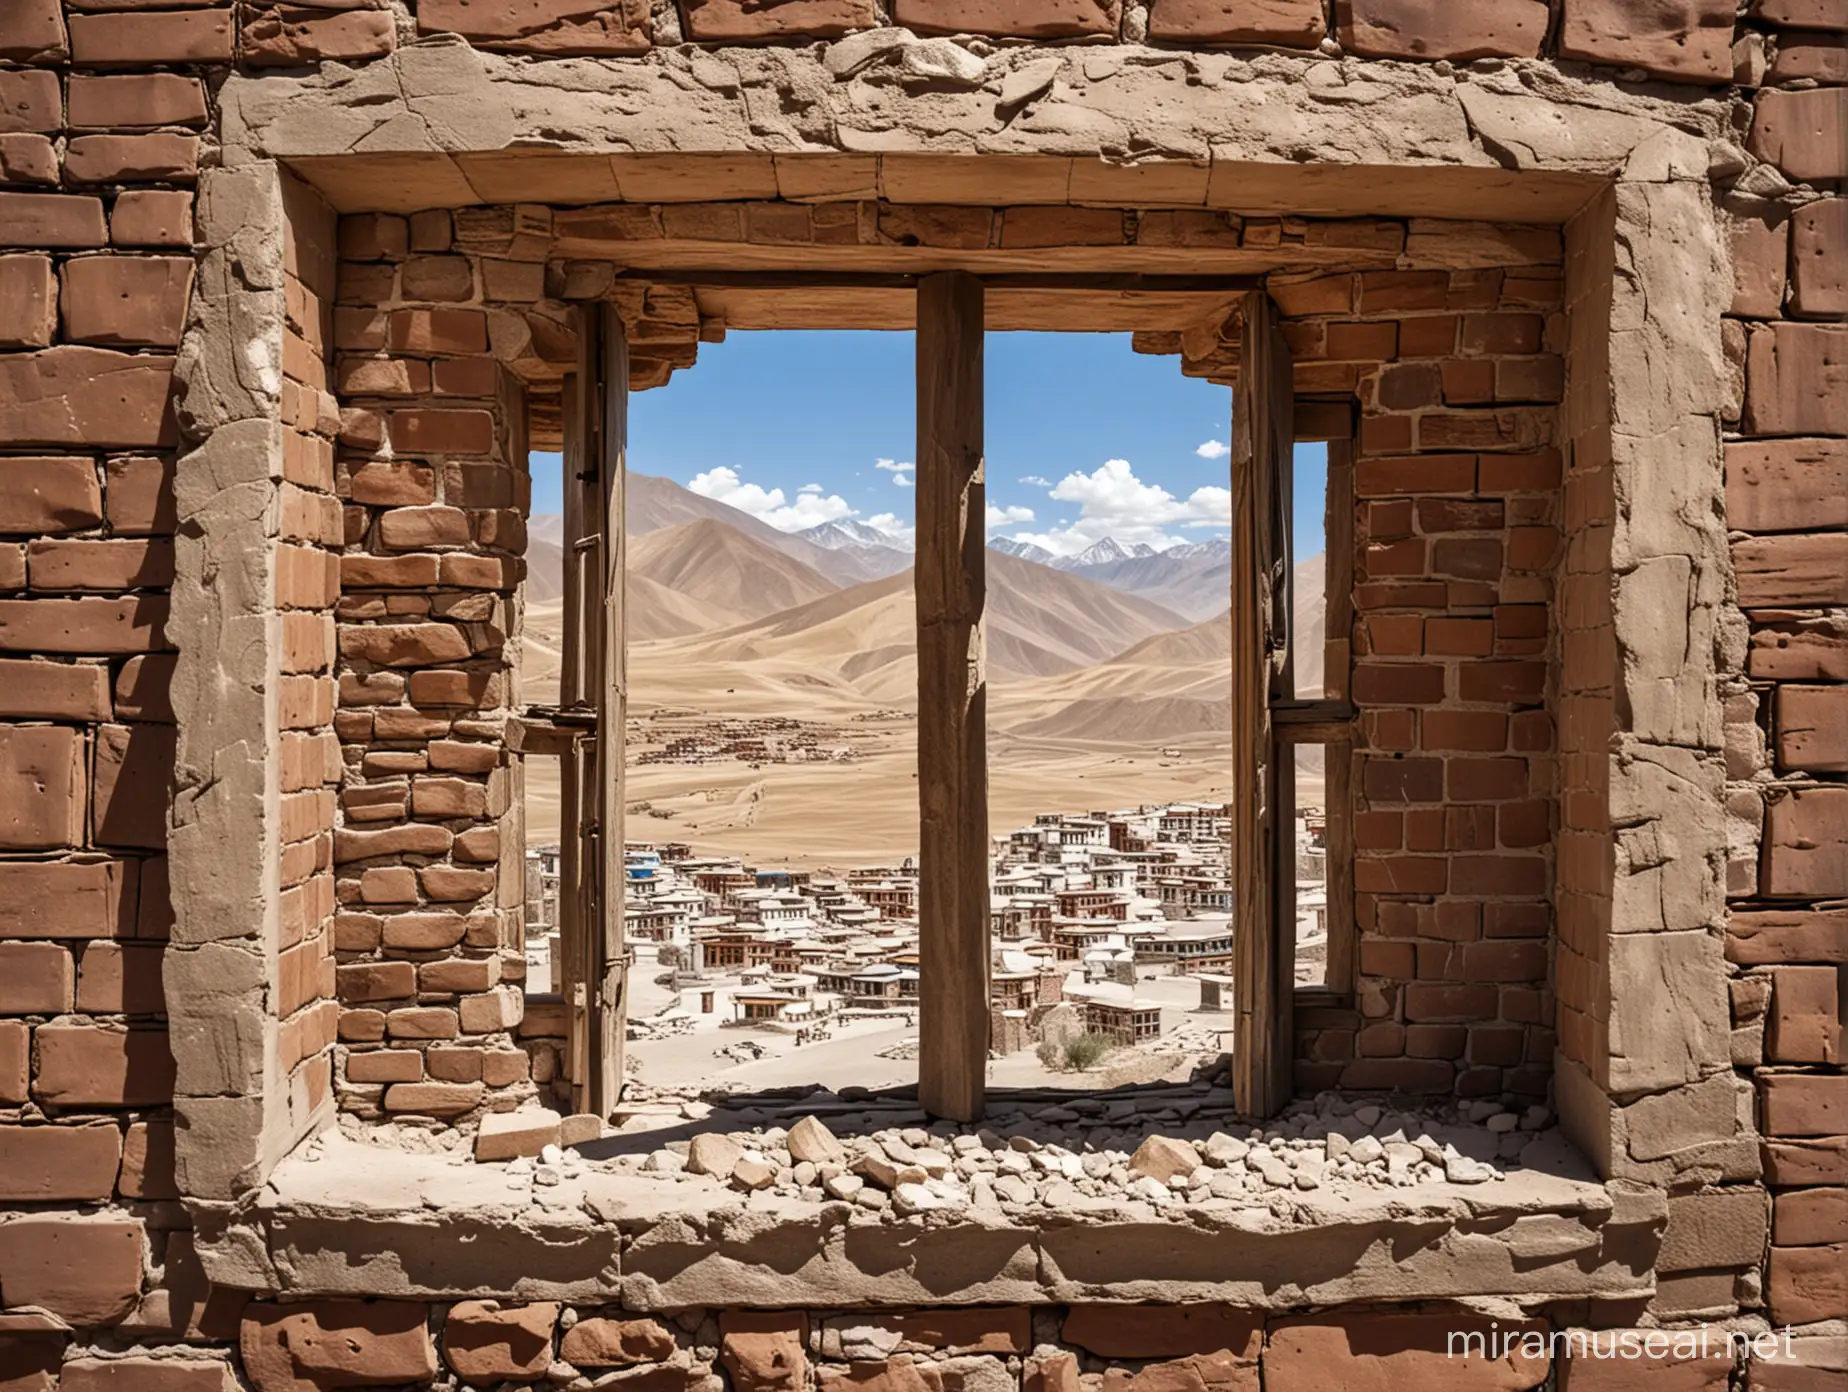 Tibetan Monastery Window with Distressed Masonry and Dusty View